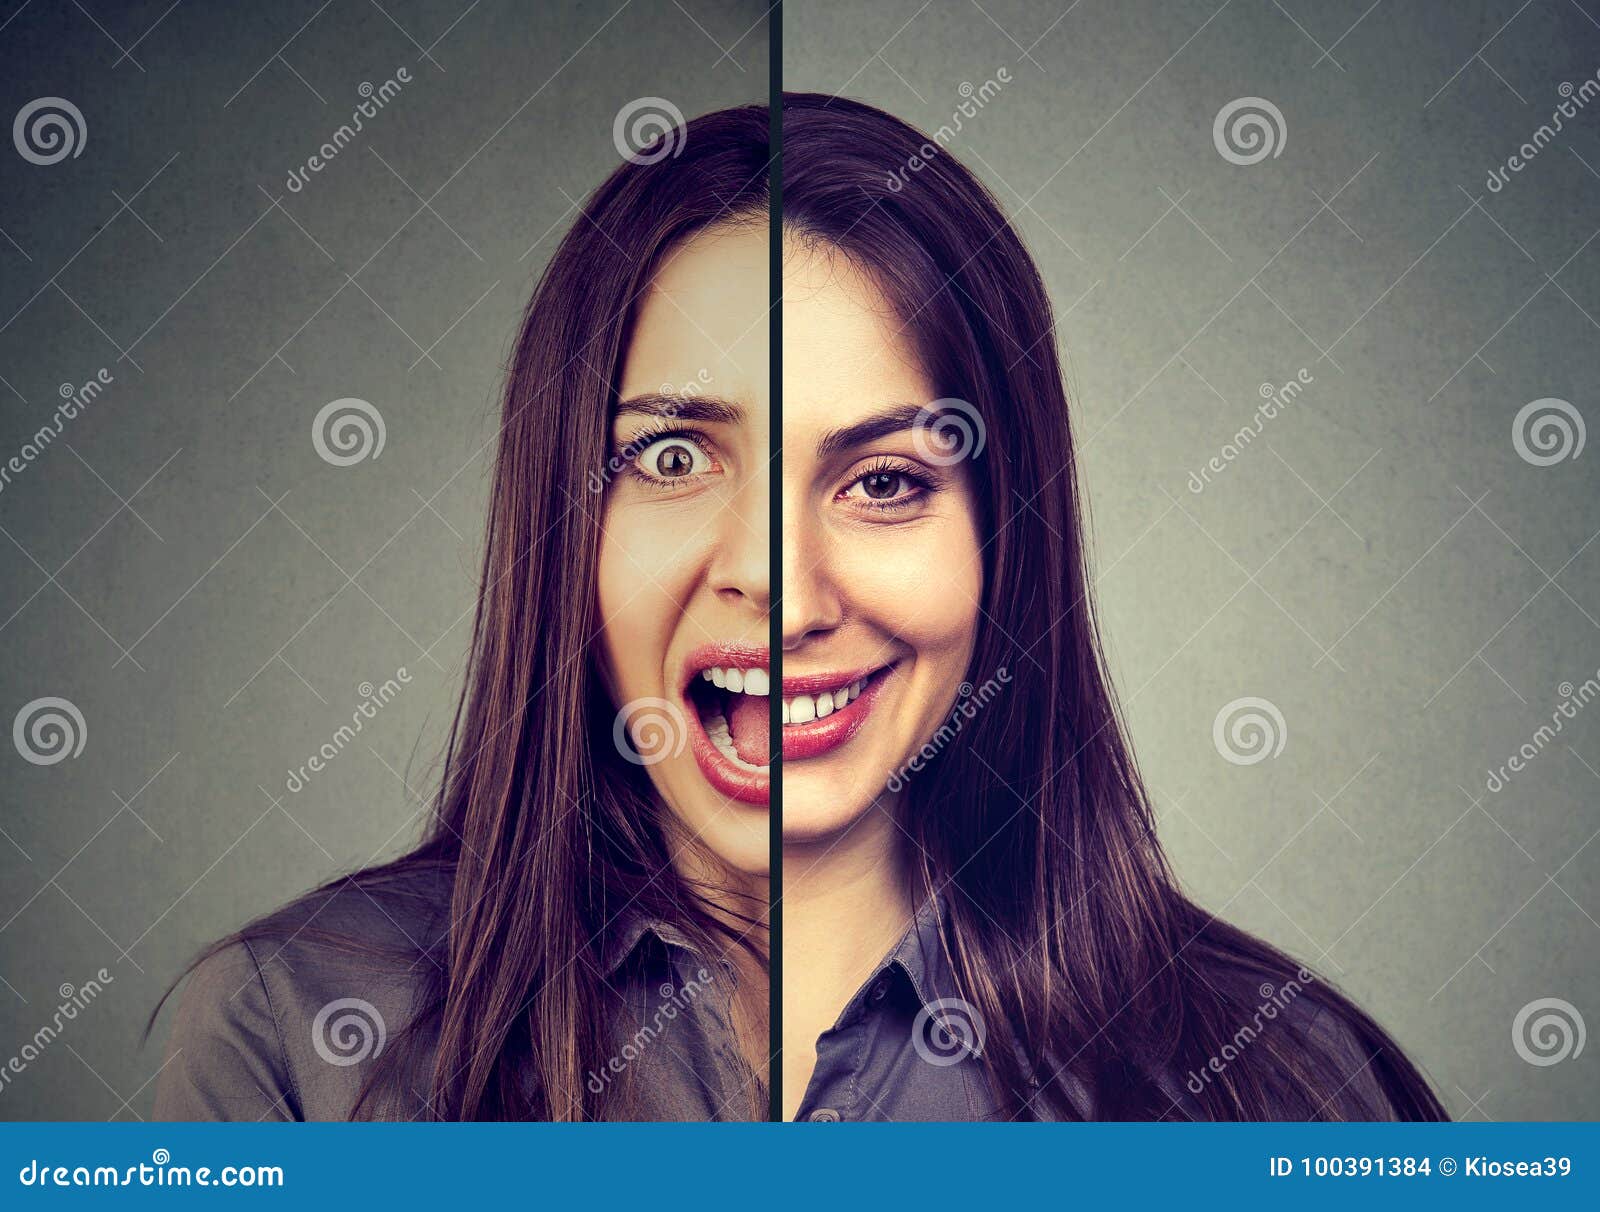 disorder and facial perceptions Bipolar